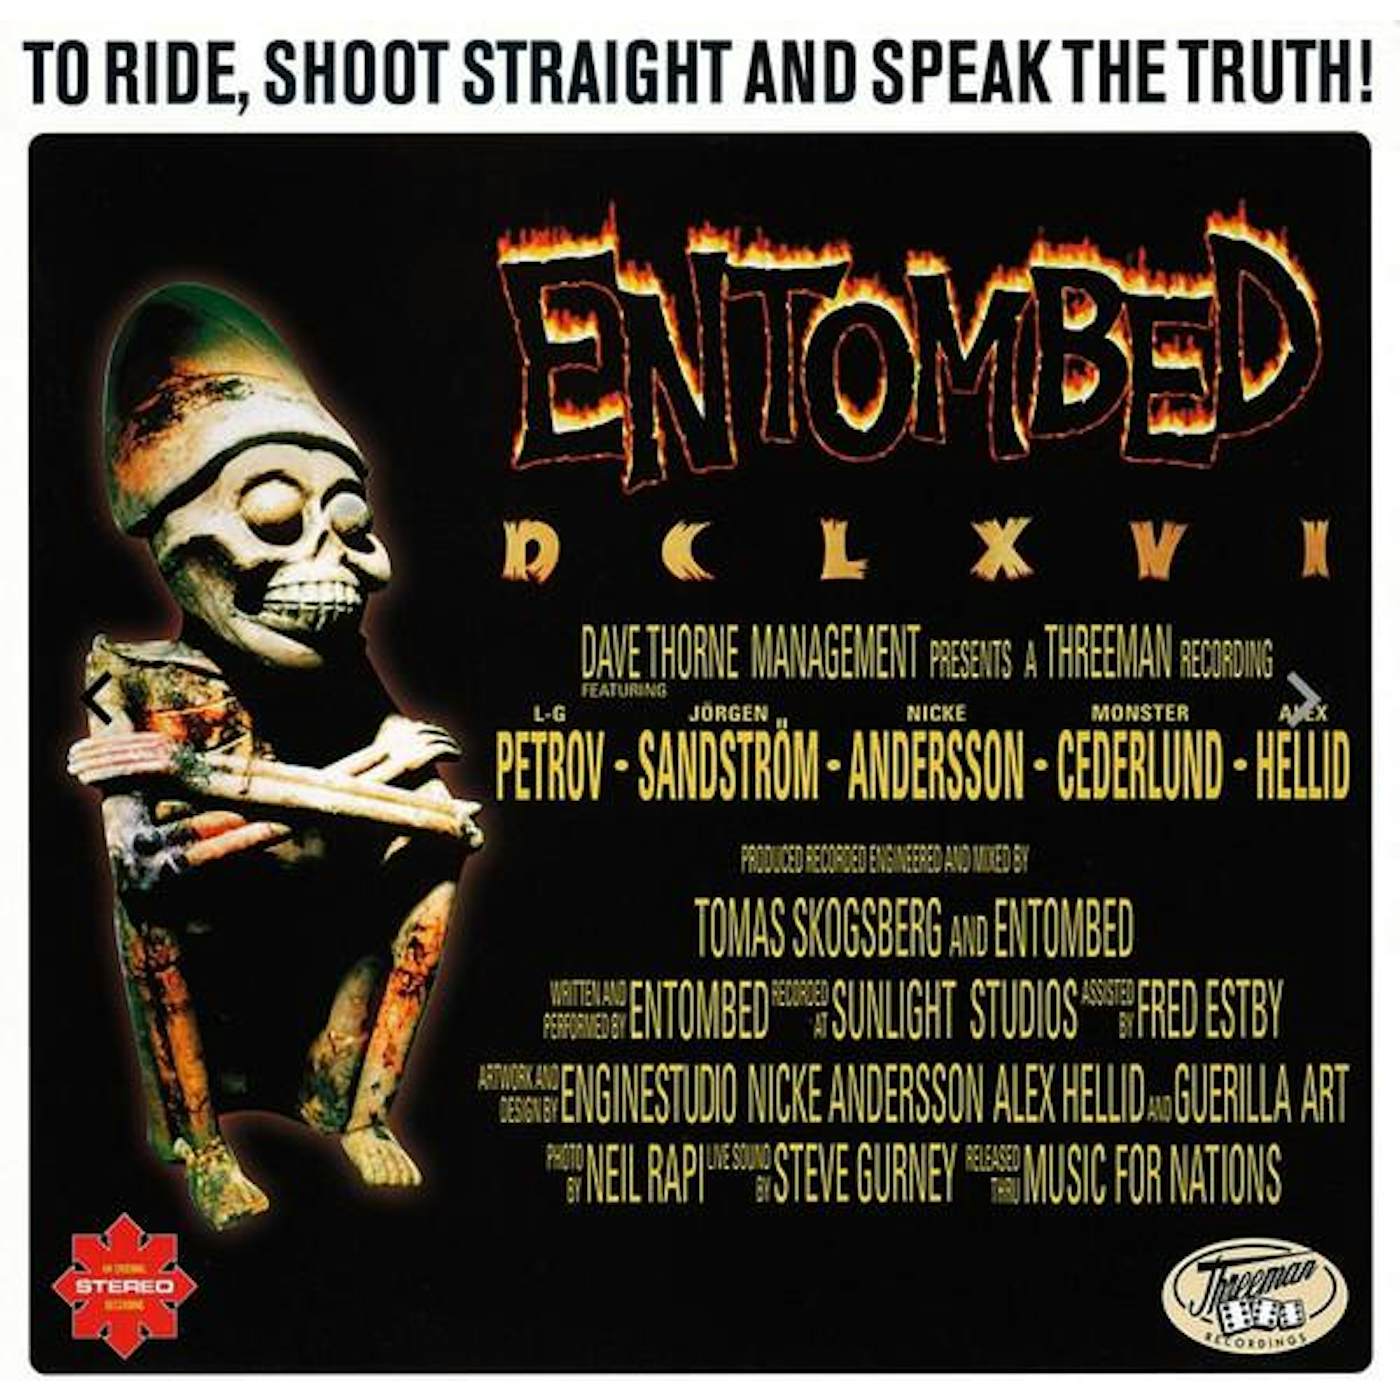 Entombed DCLXVI - TO RIDE, SHOOT STRAIGHT & SPEAK THE TRUTH Vinyl Record